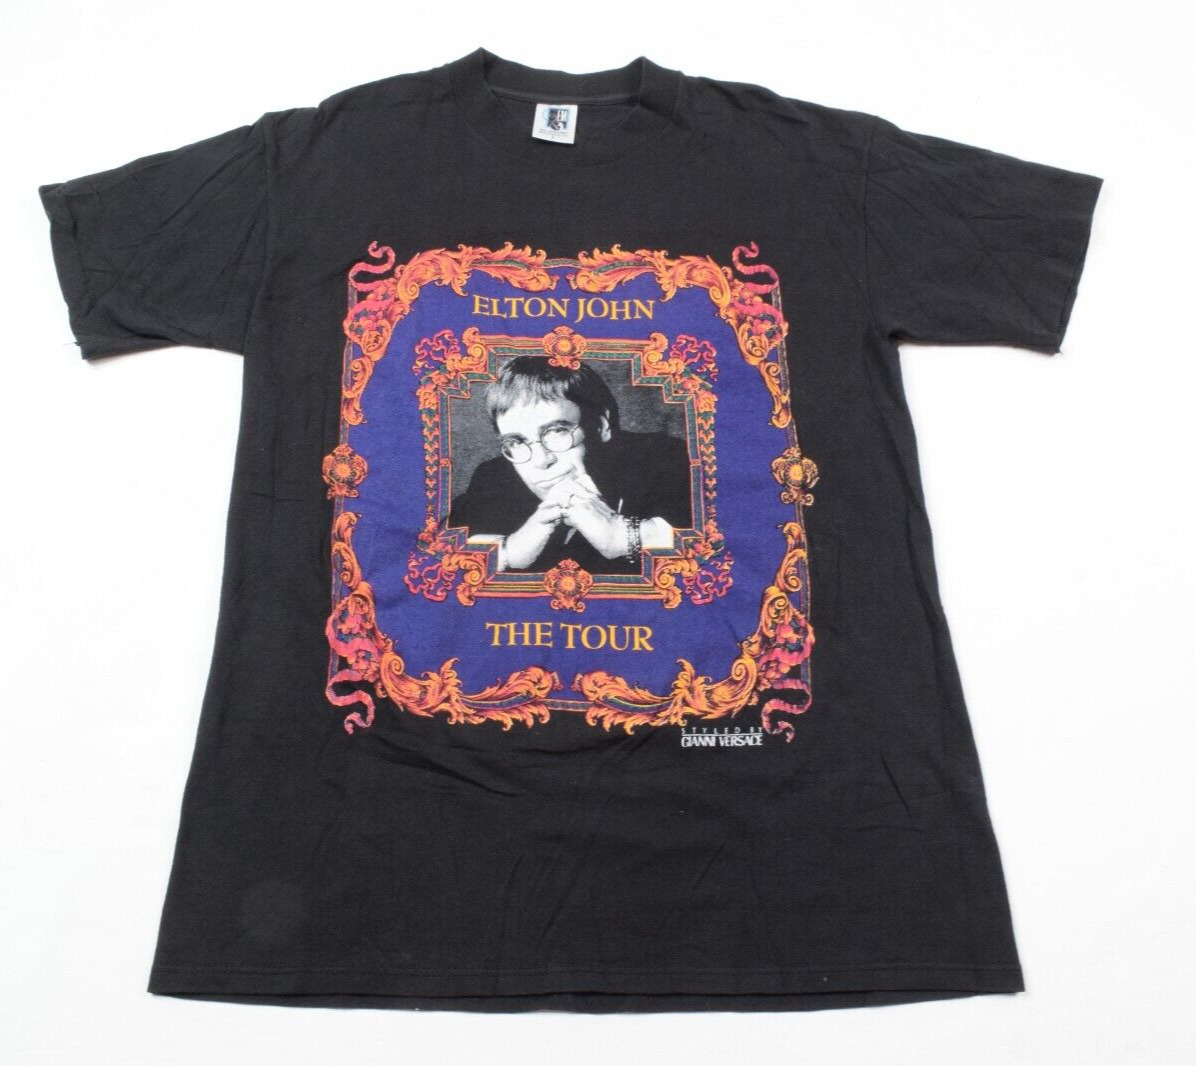 Vintage Elton John 1992-1993 The Tour Shirt Adult Large Black Gianni Versace